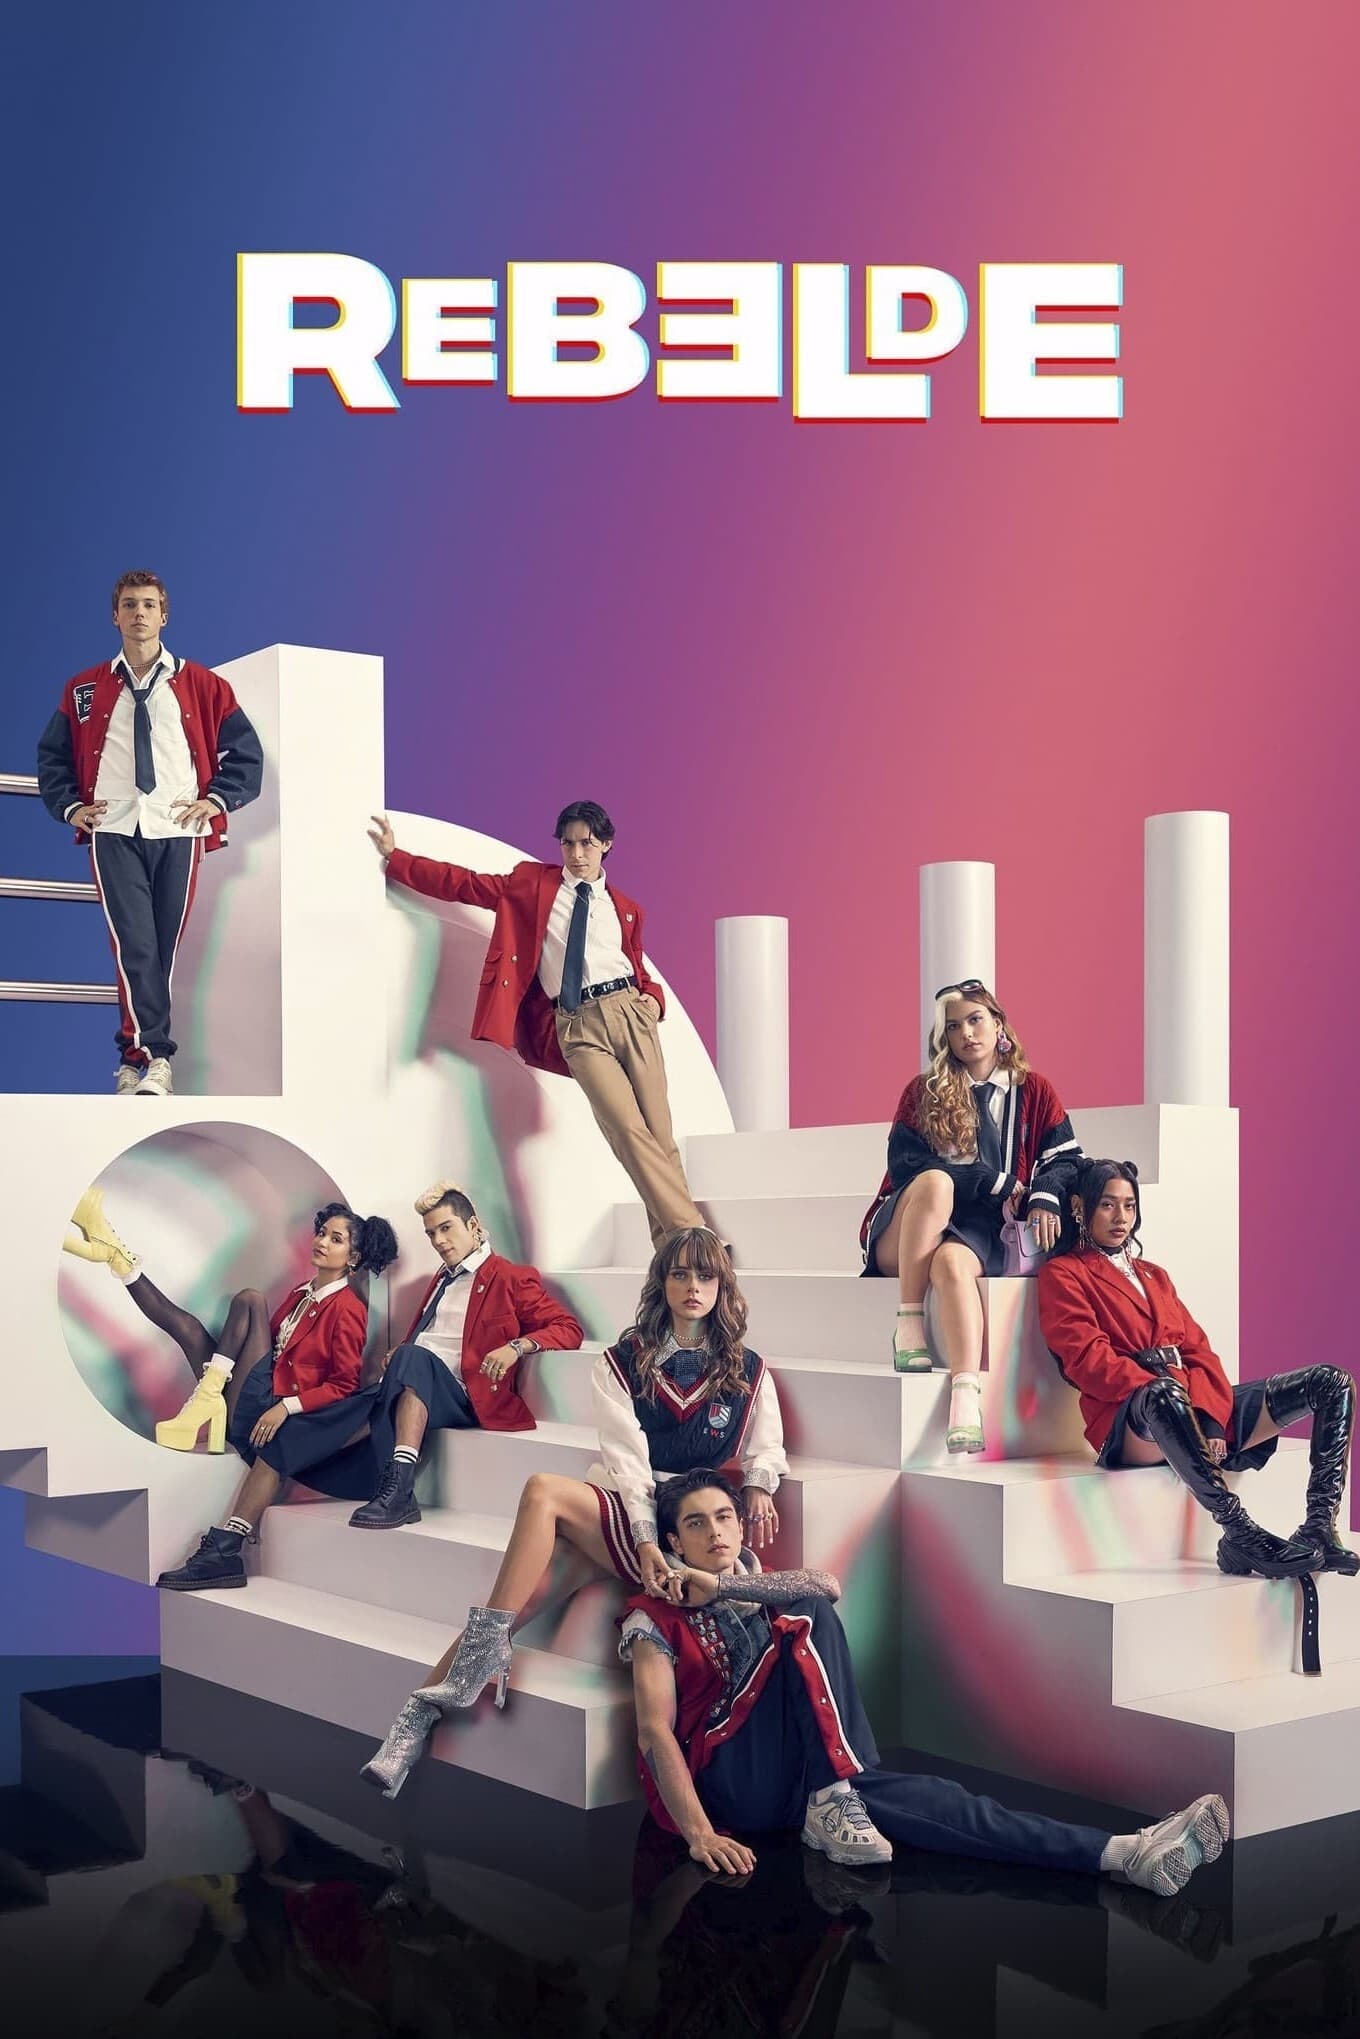 Rebelde TV Shows About Teen Romance